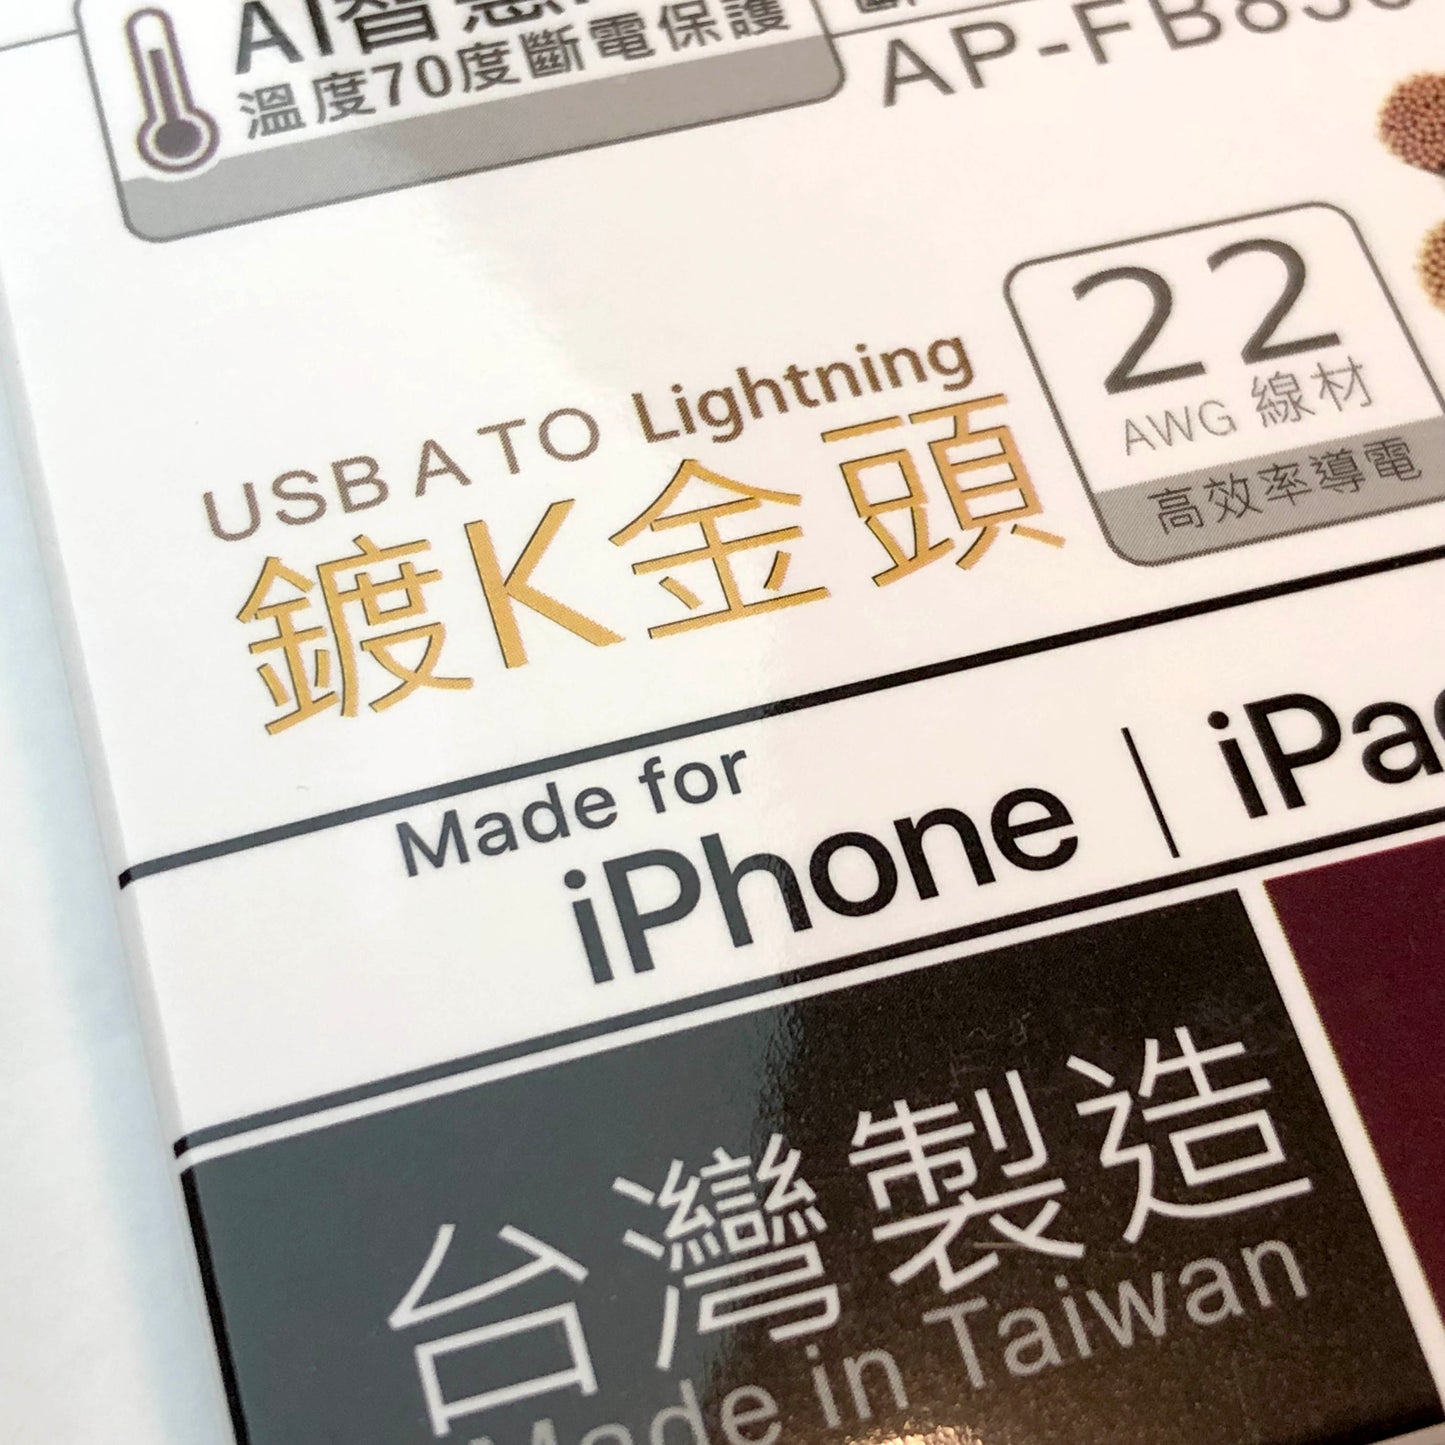 資安 iPhone 差電線 無後門 高質鍍K金頭 🇹🇼 Made in Taiwan ✨New Arrival✨